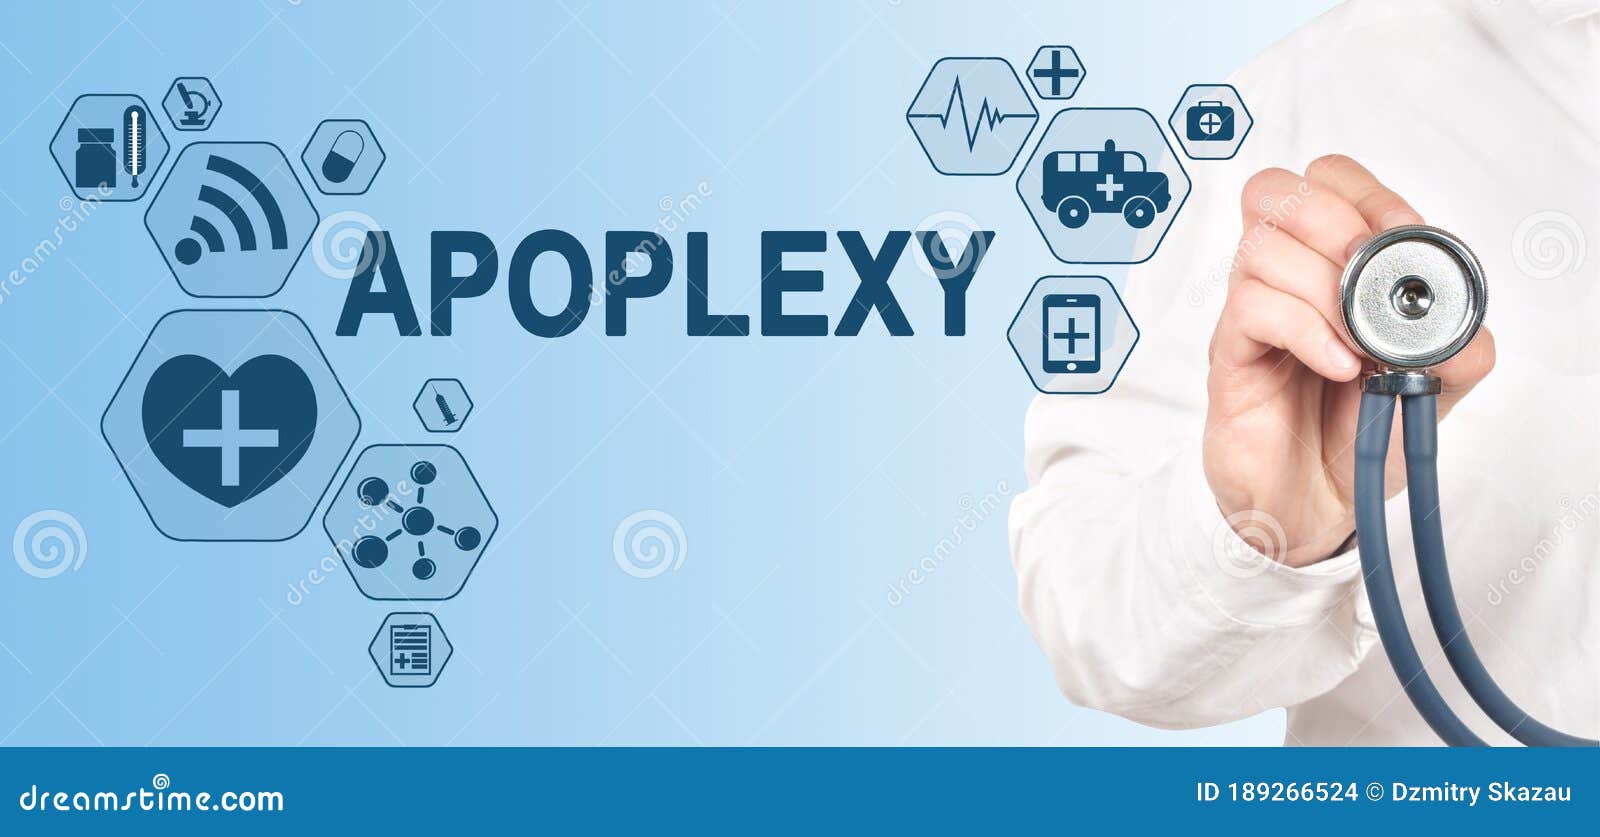 apoplexy diagnosis medical and healthcare concept. doctor